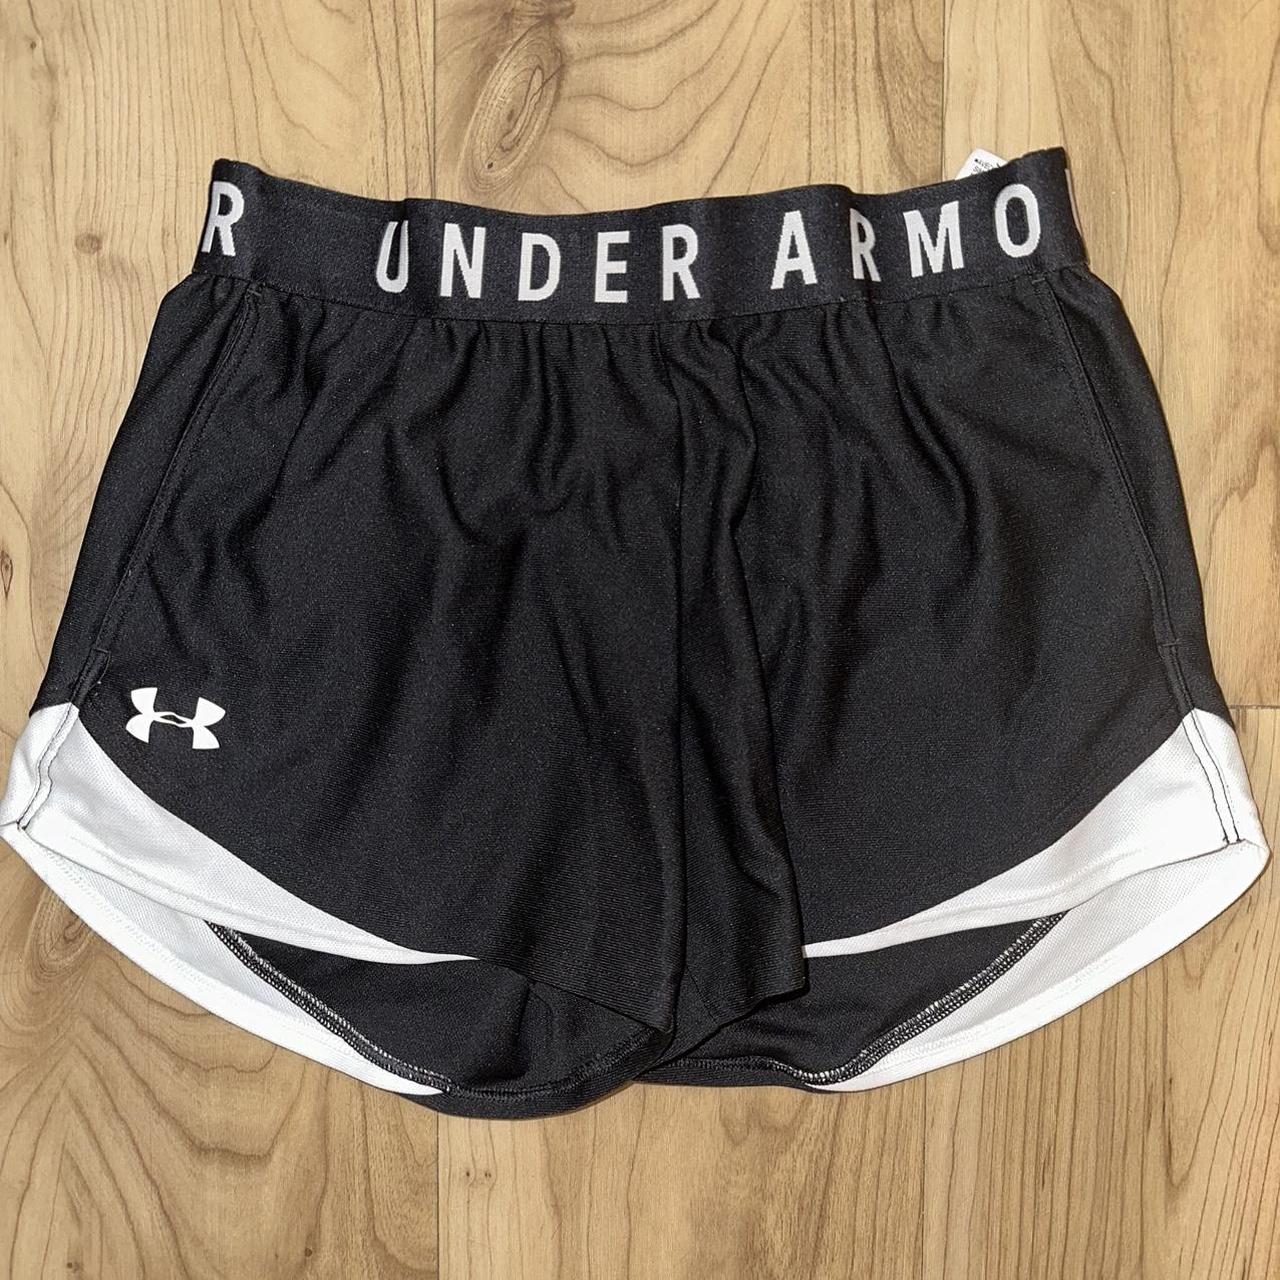 under armor shorts size xs - Depop